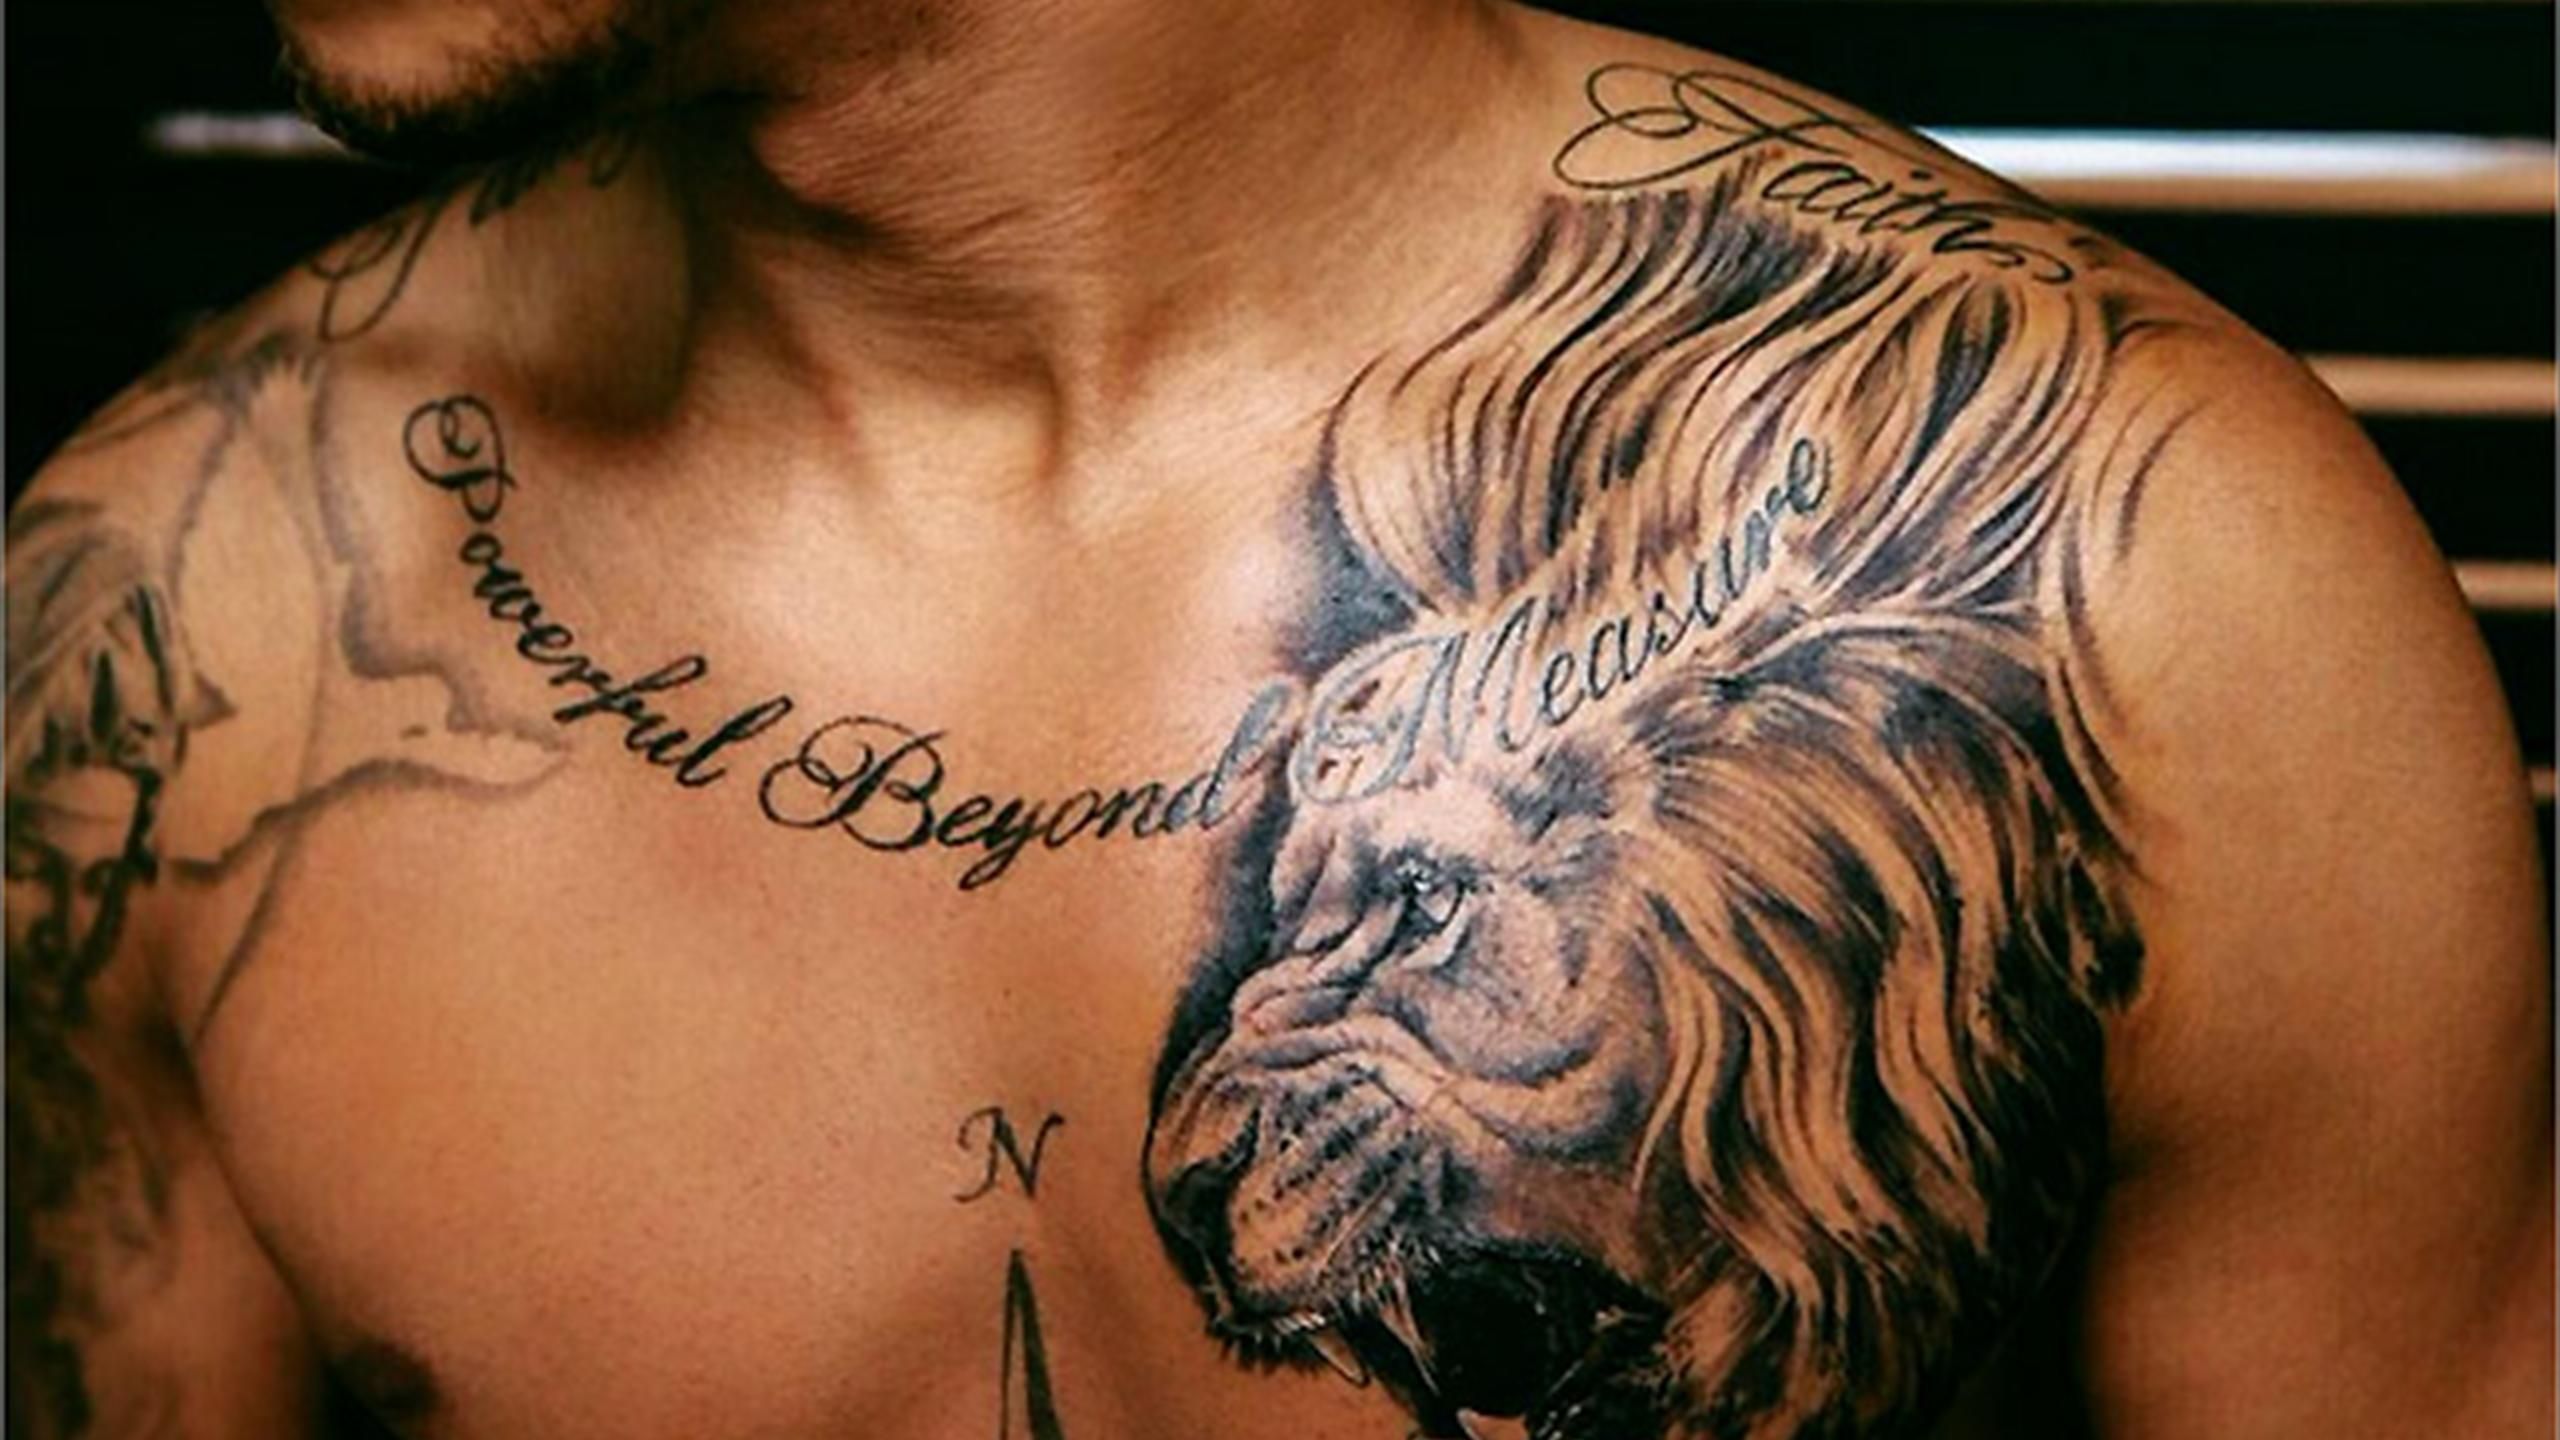 23 Best Chelsea tattoo ideas | chelsea tattoo, lion tattoo, sleeve tattoos